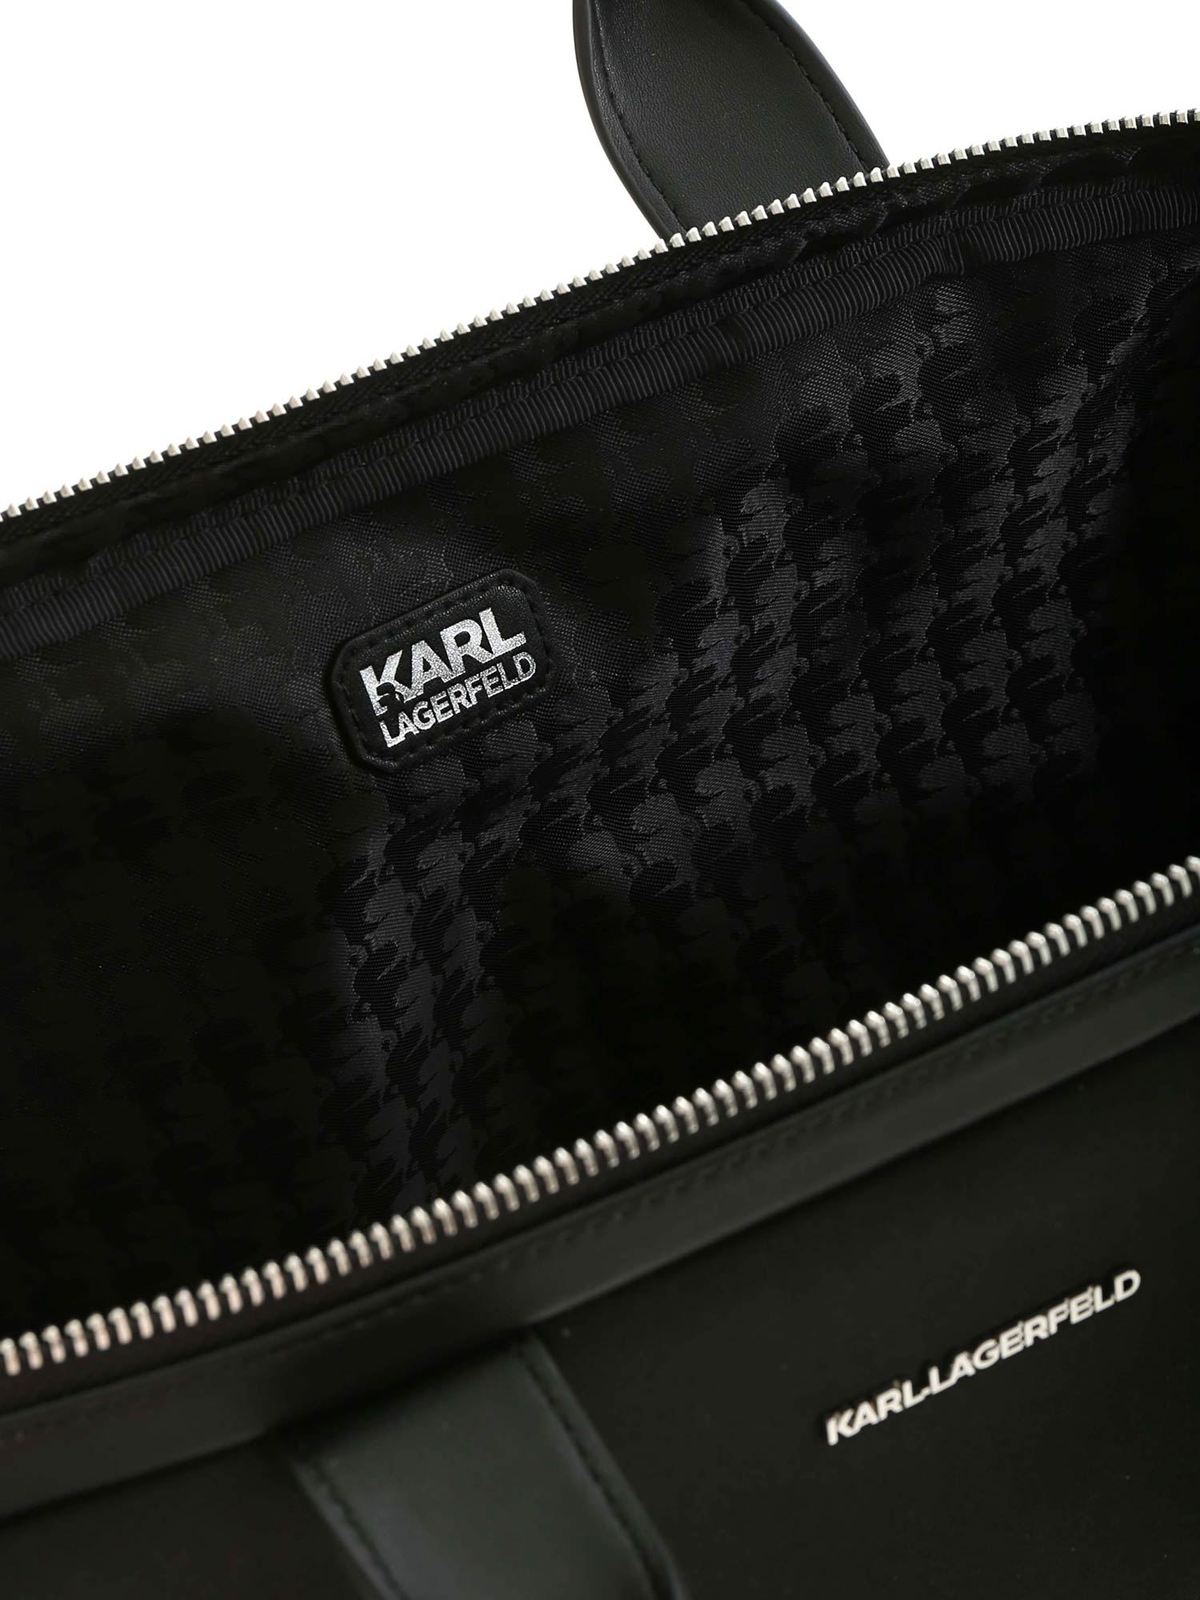 Buy Karl Lagerfeld K/kross Clutch Bag - Black At 49% Off